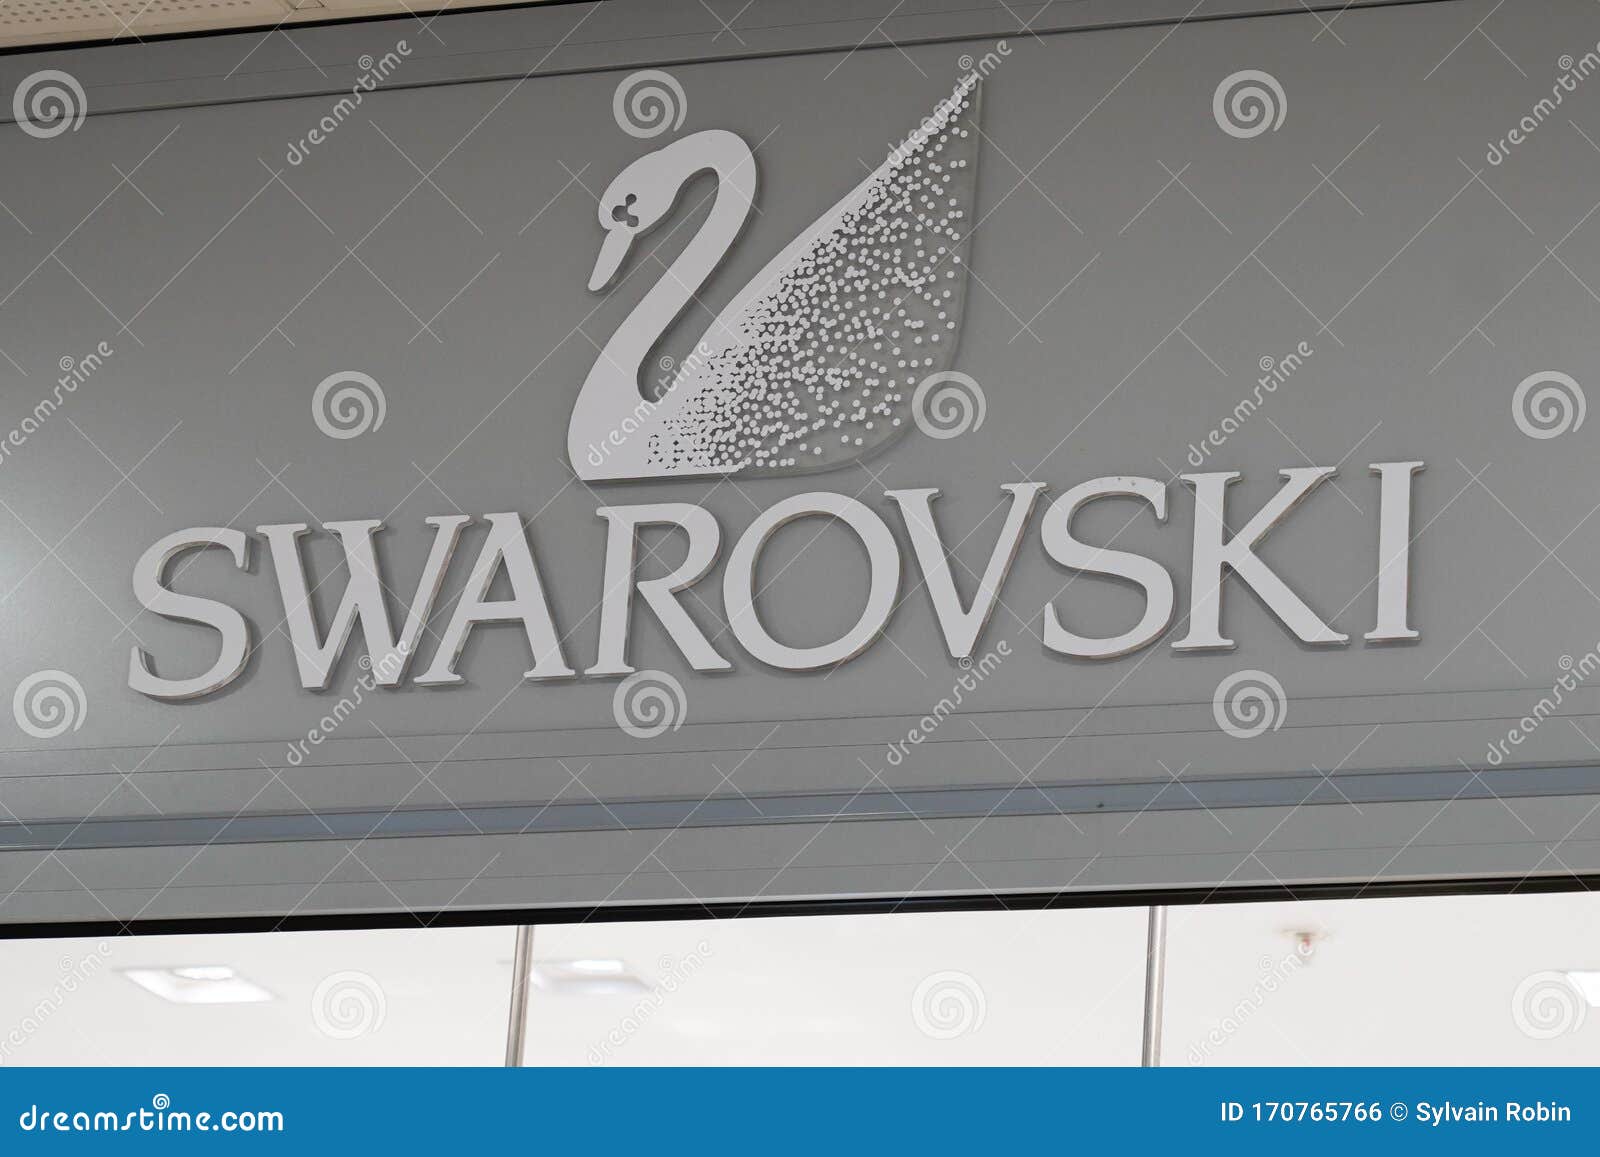 Minsk Belarus January 6 2020 Swarovski Stock Photo 1610631922 | Shutterstock